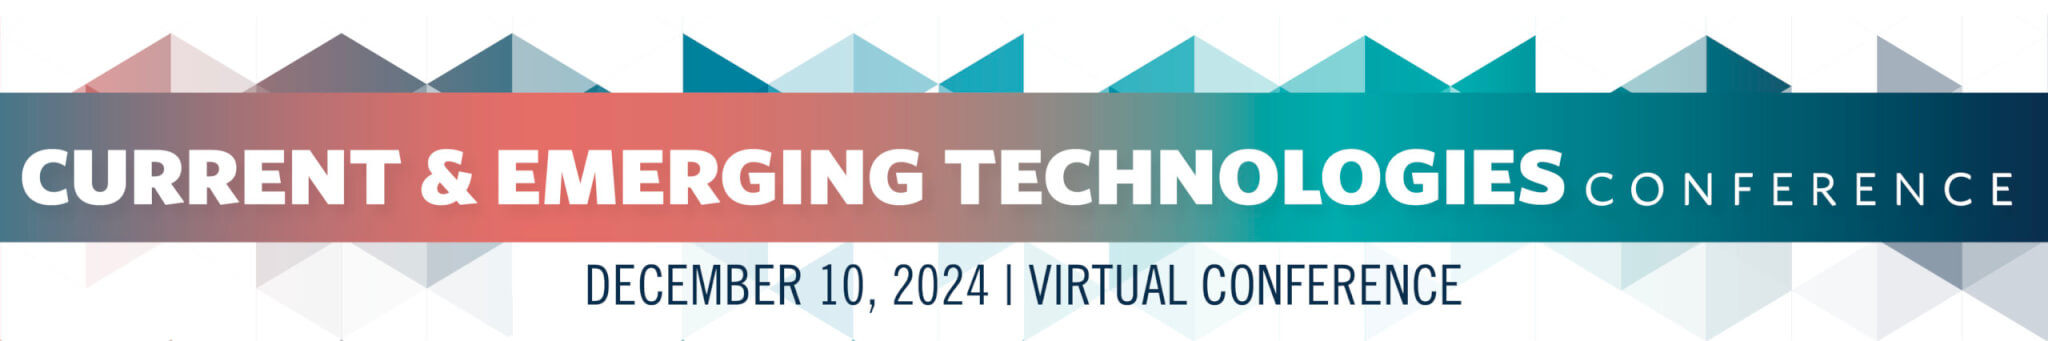 Current & Emerging Technologies Conference Header 2024